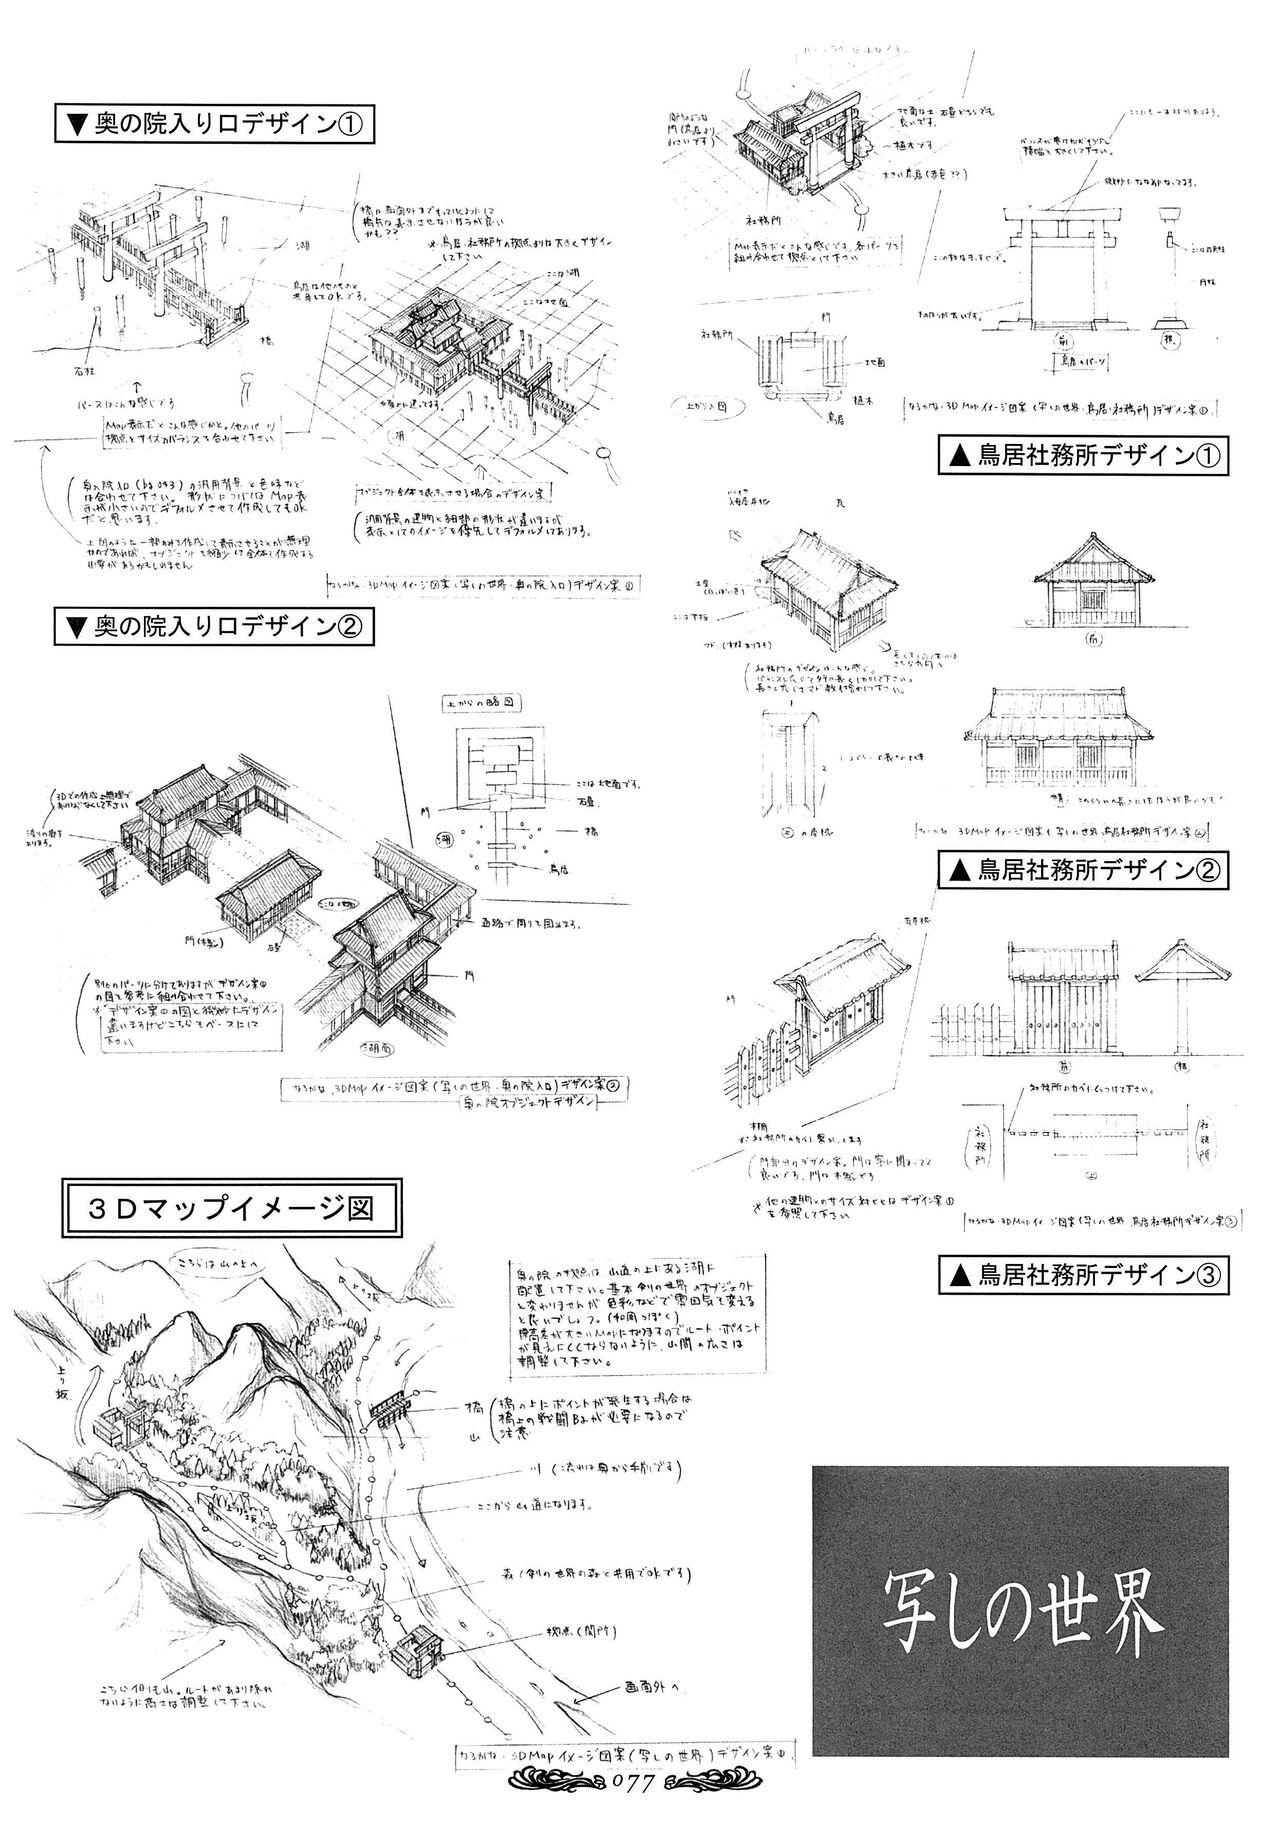 Seinarukana - offical ArtBook 77